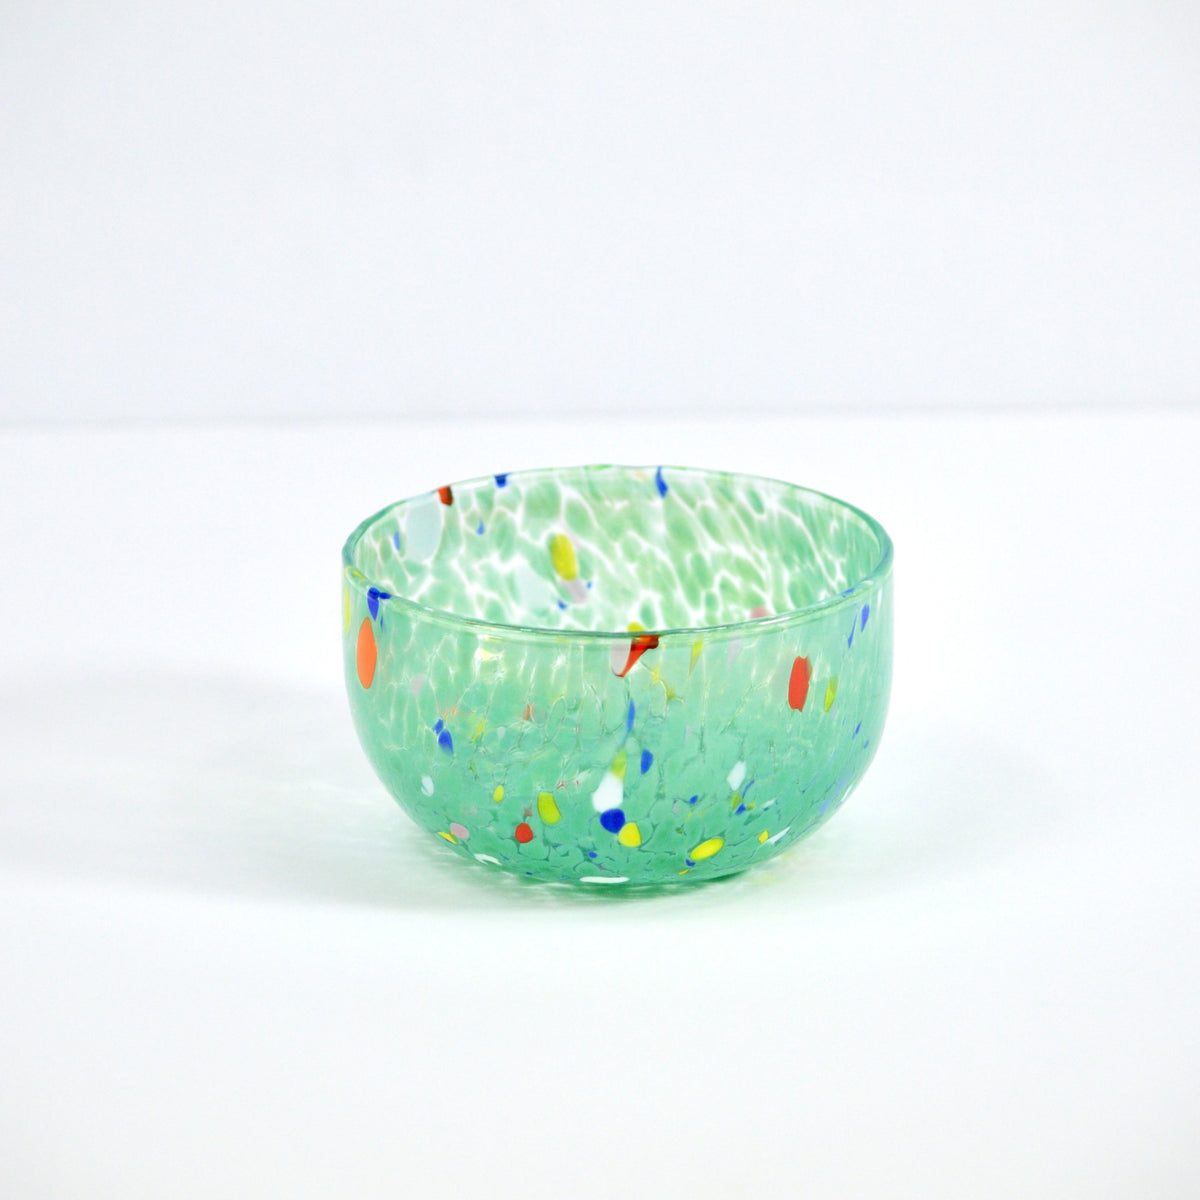 Fresca Murano Glass Bowl, Made in Italy - My Italian Decor